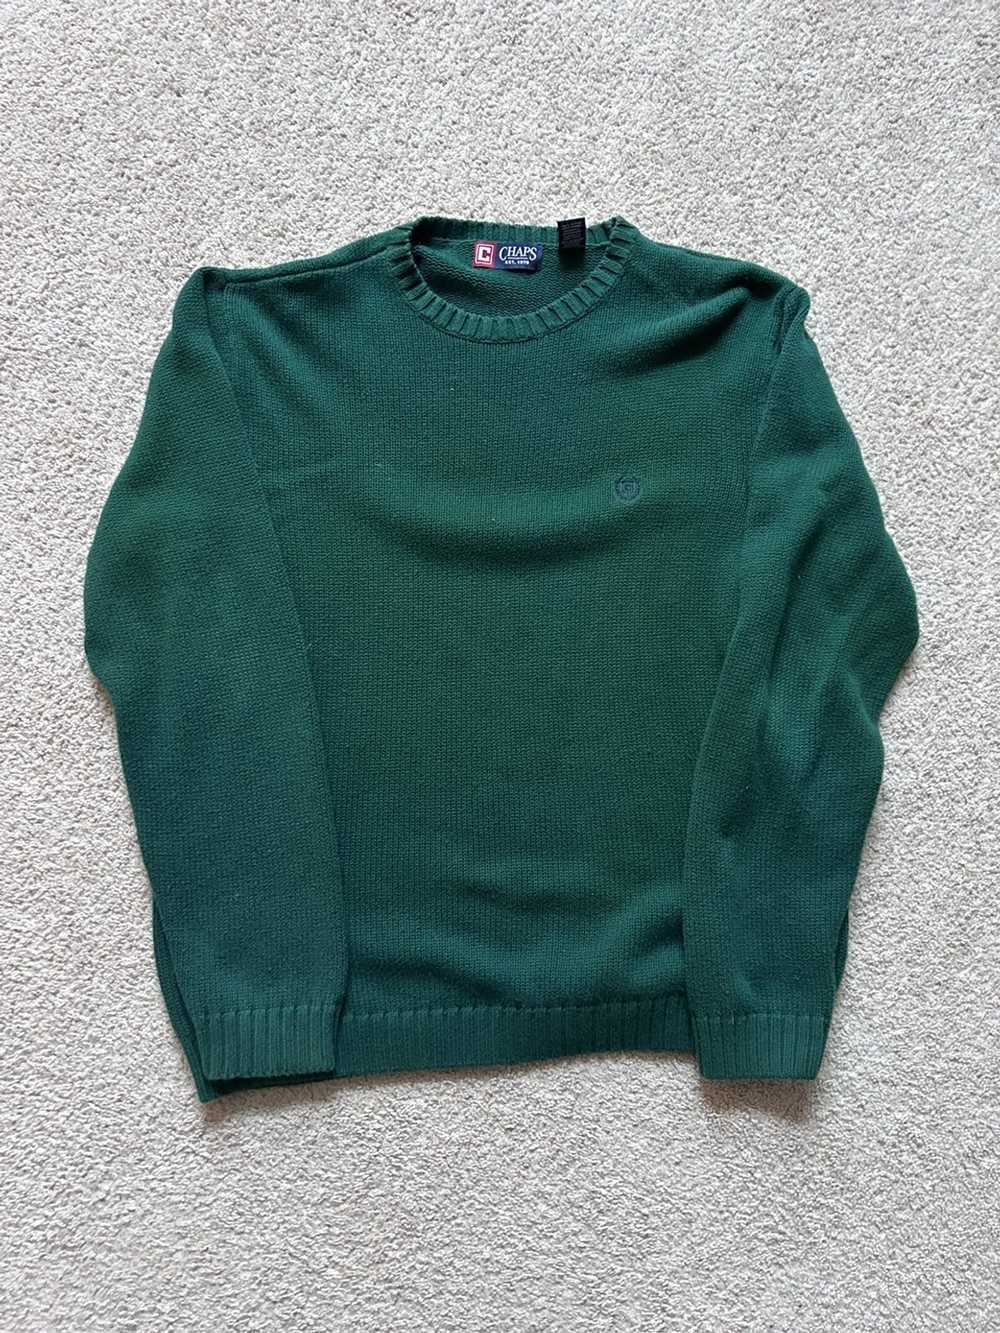 Chaps × Vintage Chaps Sweater - image 1